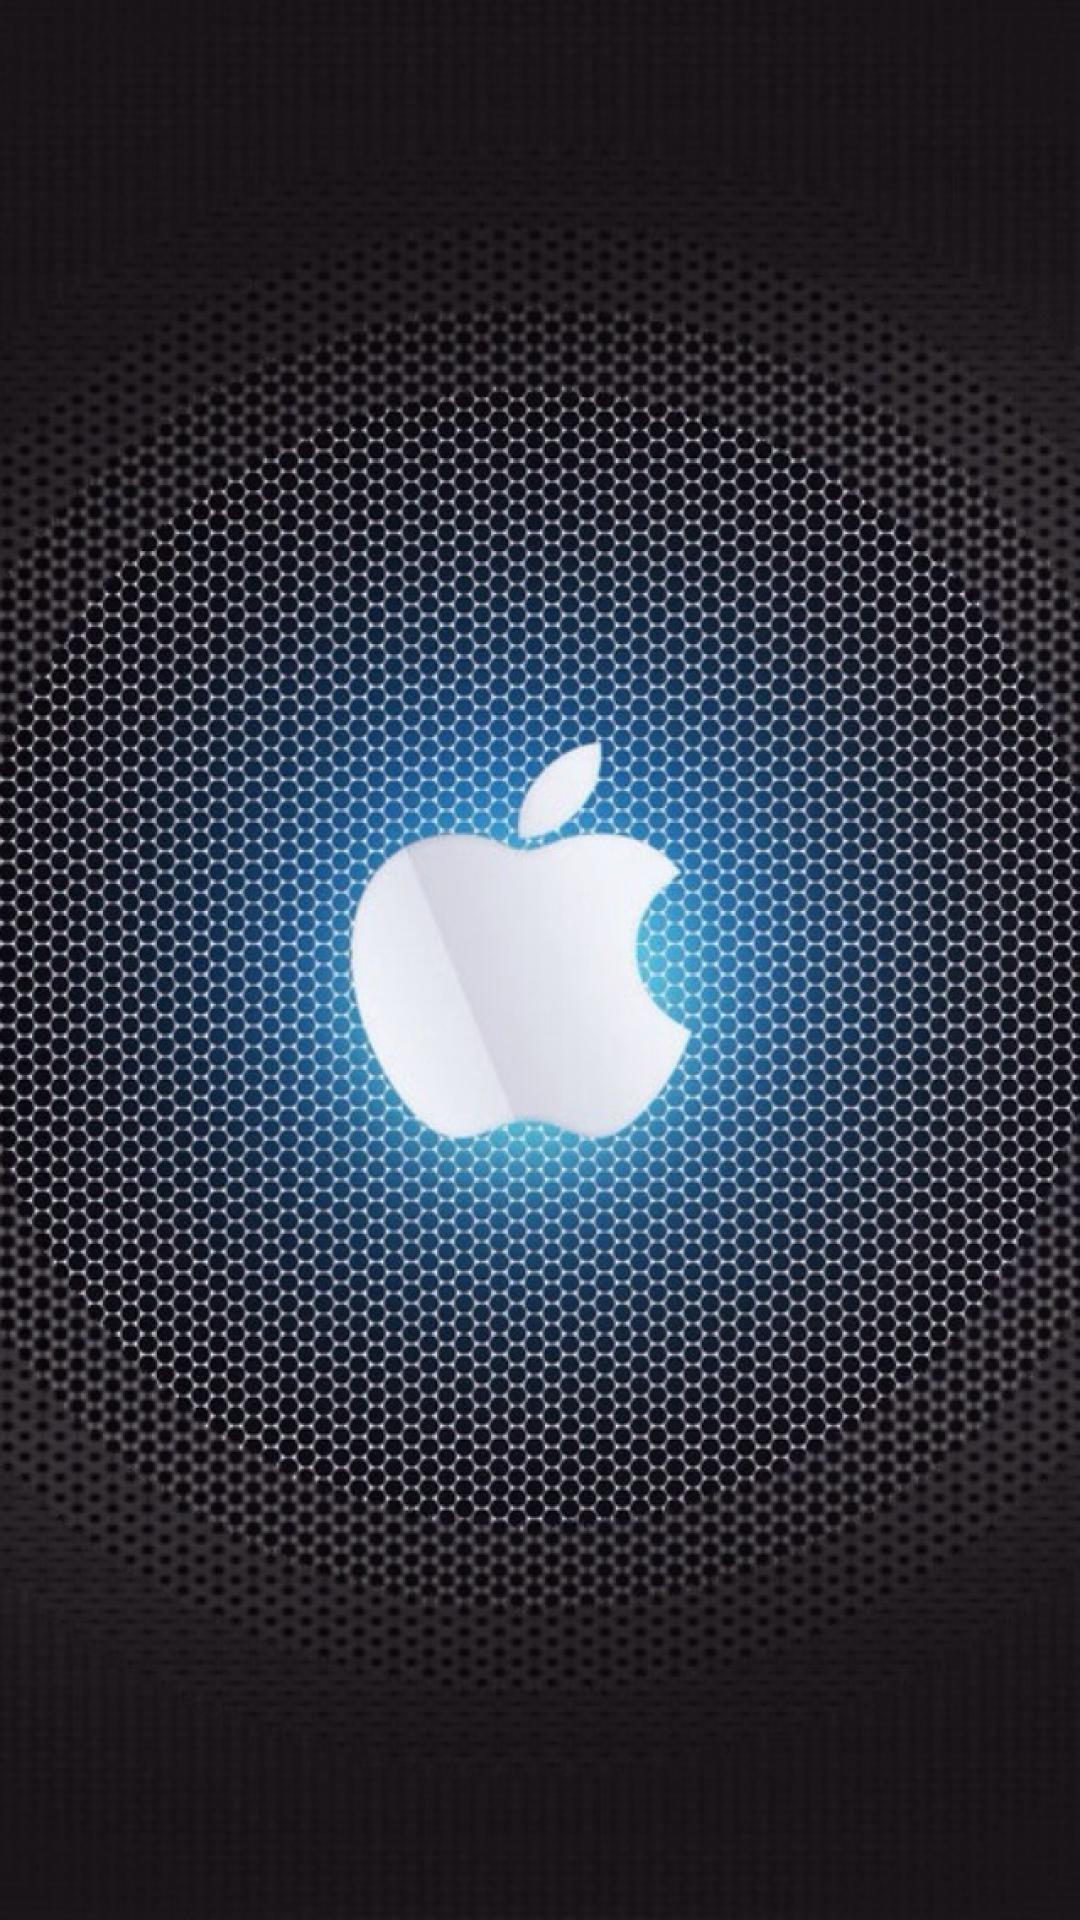 Apple Wallpaper Iphone Hd 6 , HD Wallpaper & Backgrounds